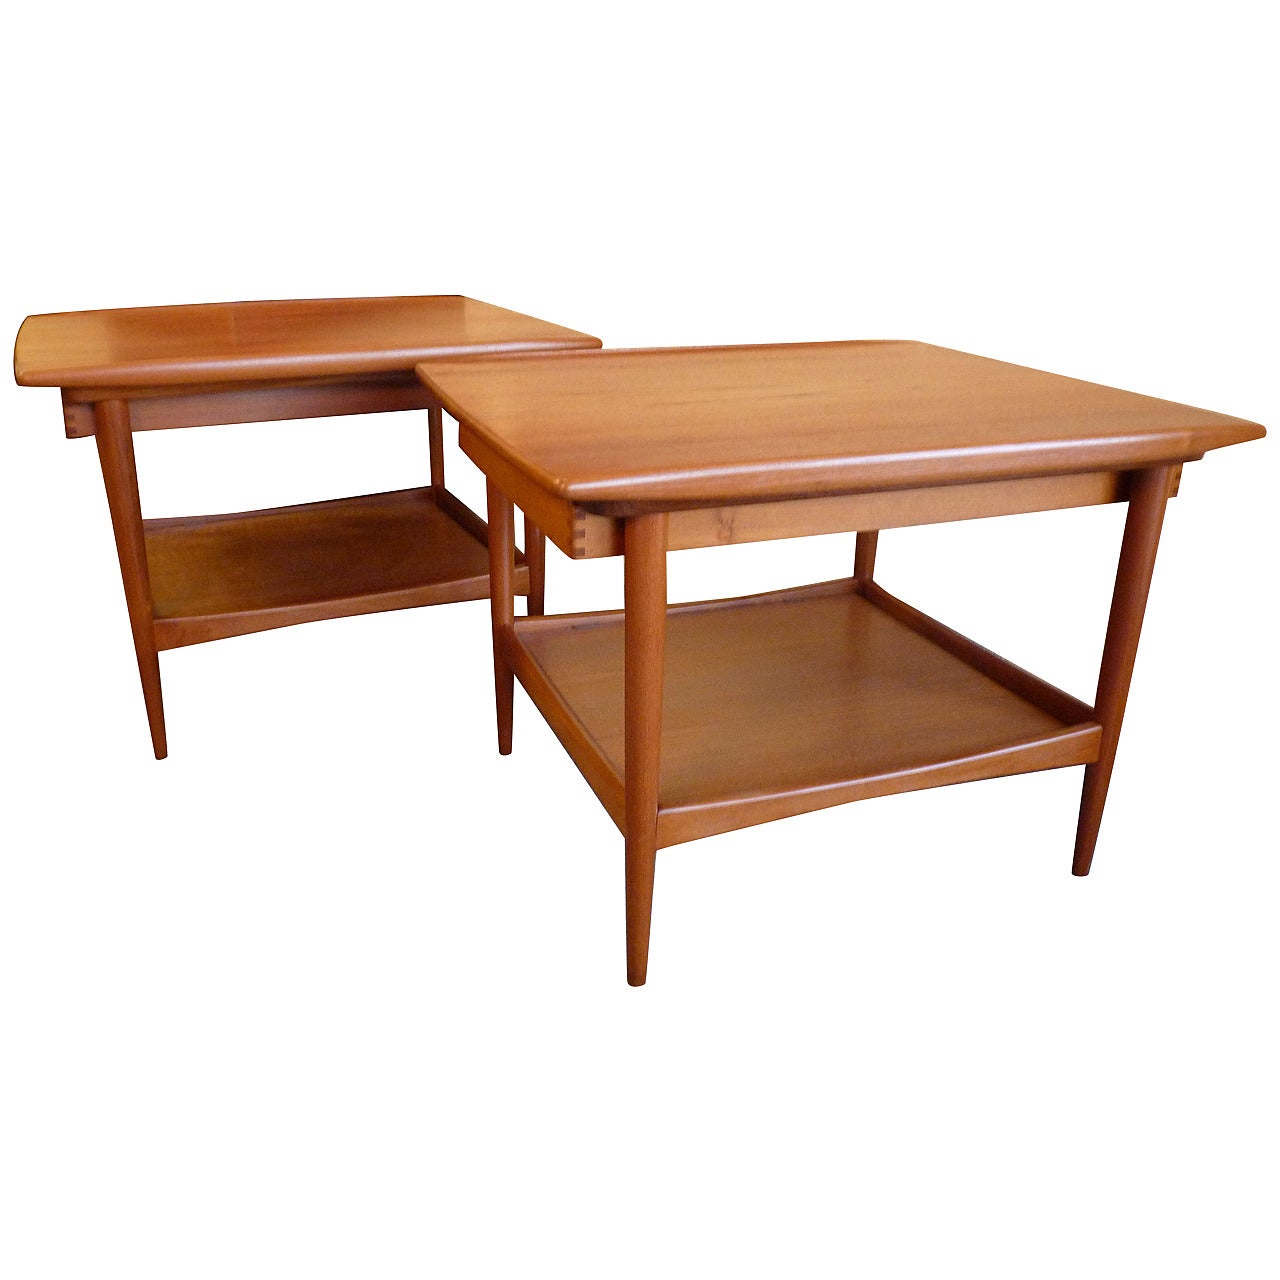 Pair of Danish Modern Side Tables by Moreddi